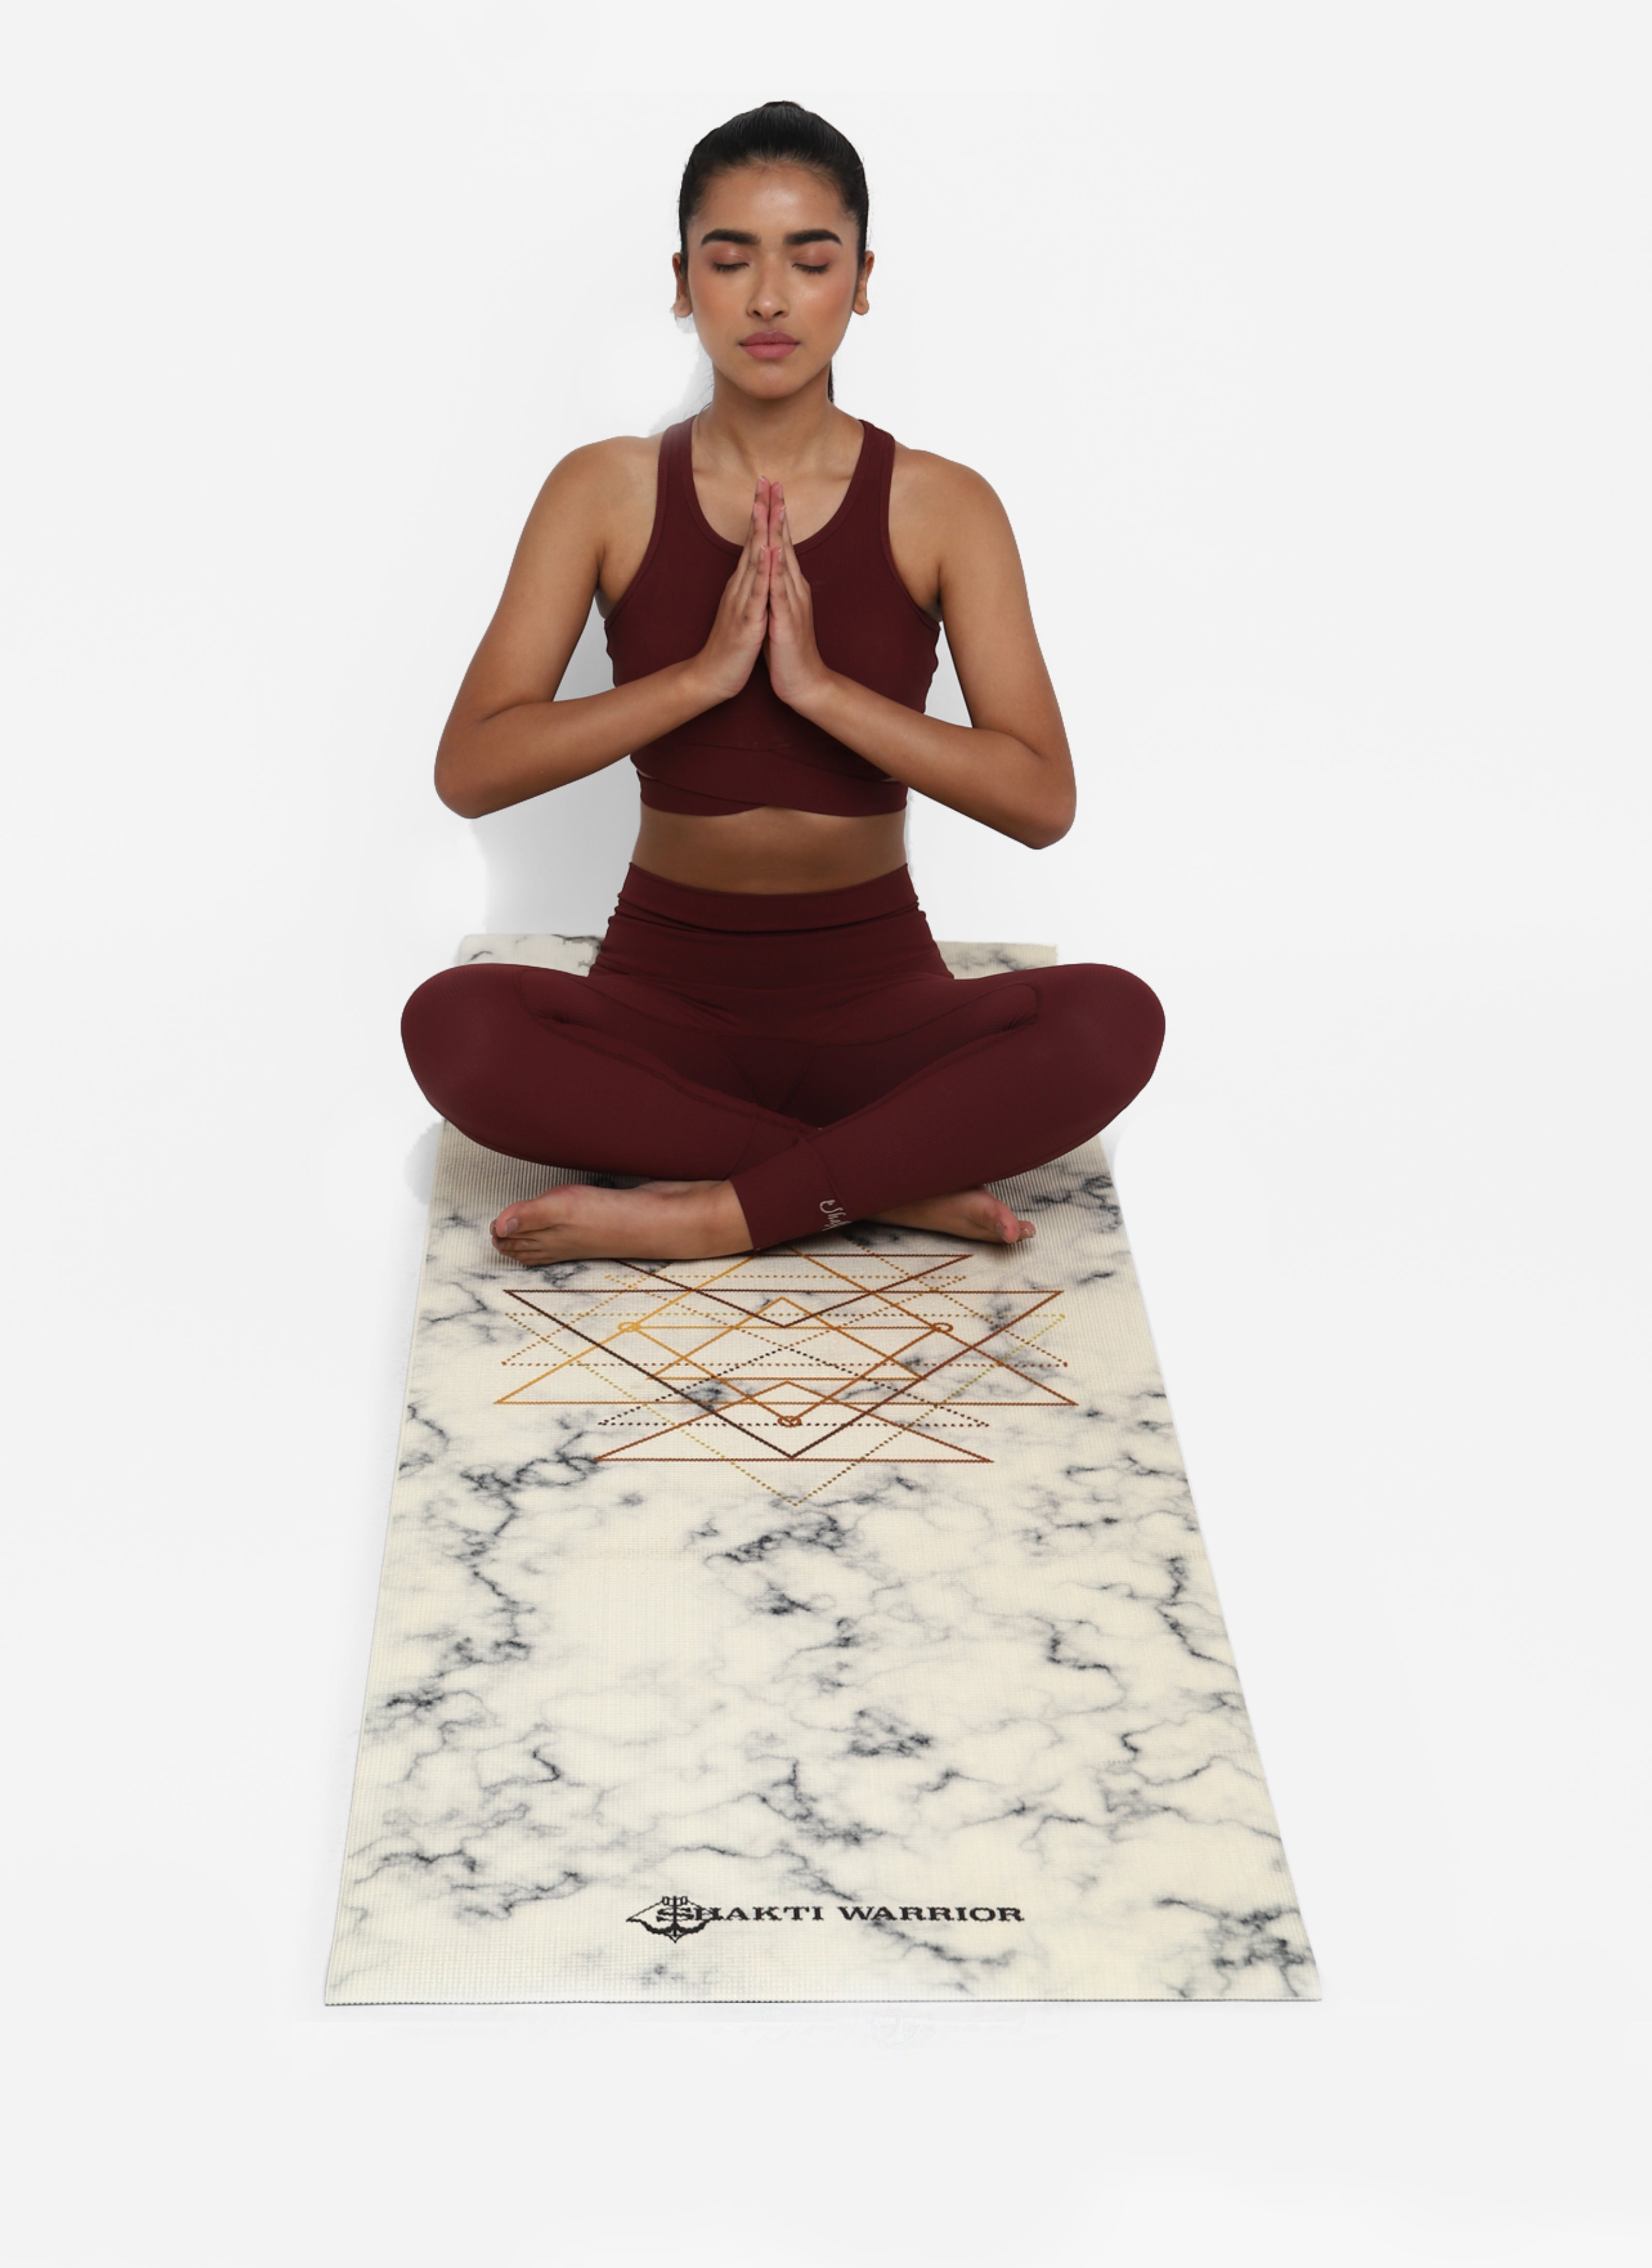 Shakti Warrior Sahasrara Pro Yoga Mat – Yoga Accessories